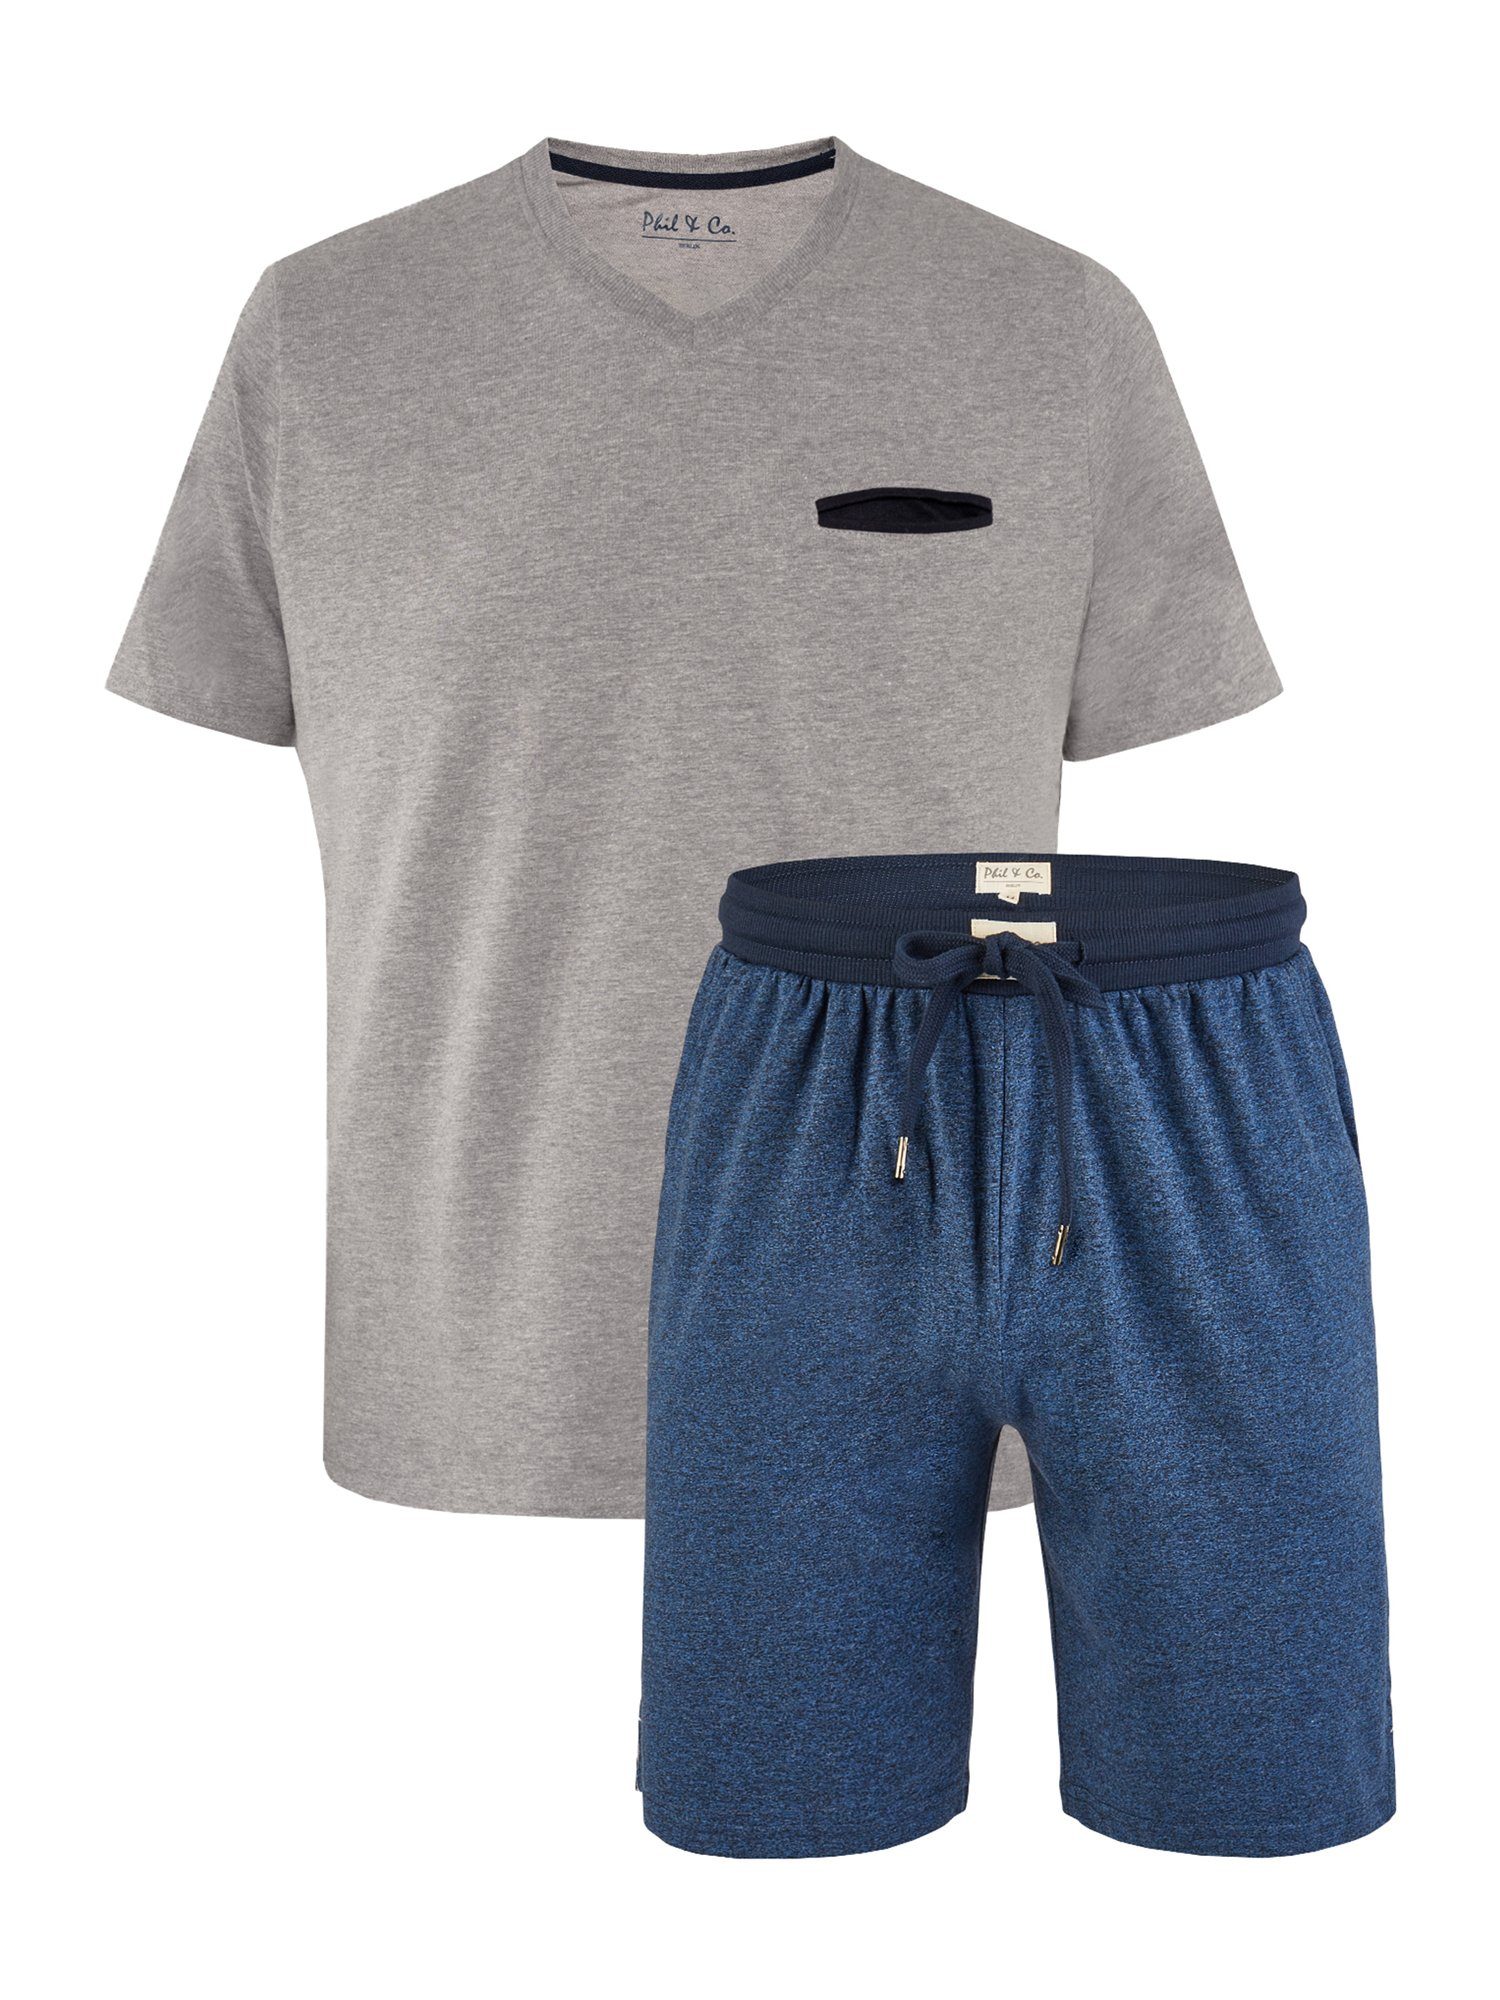 Phil & Co. Pyjama Shorty grau-navy